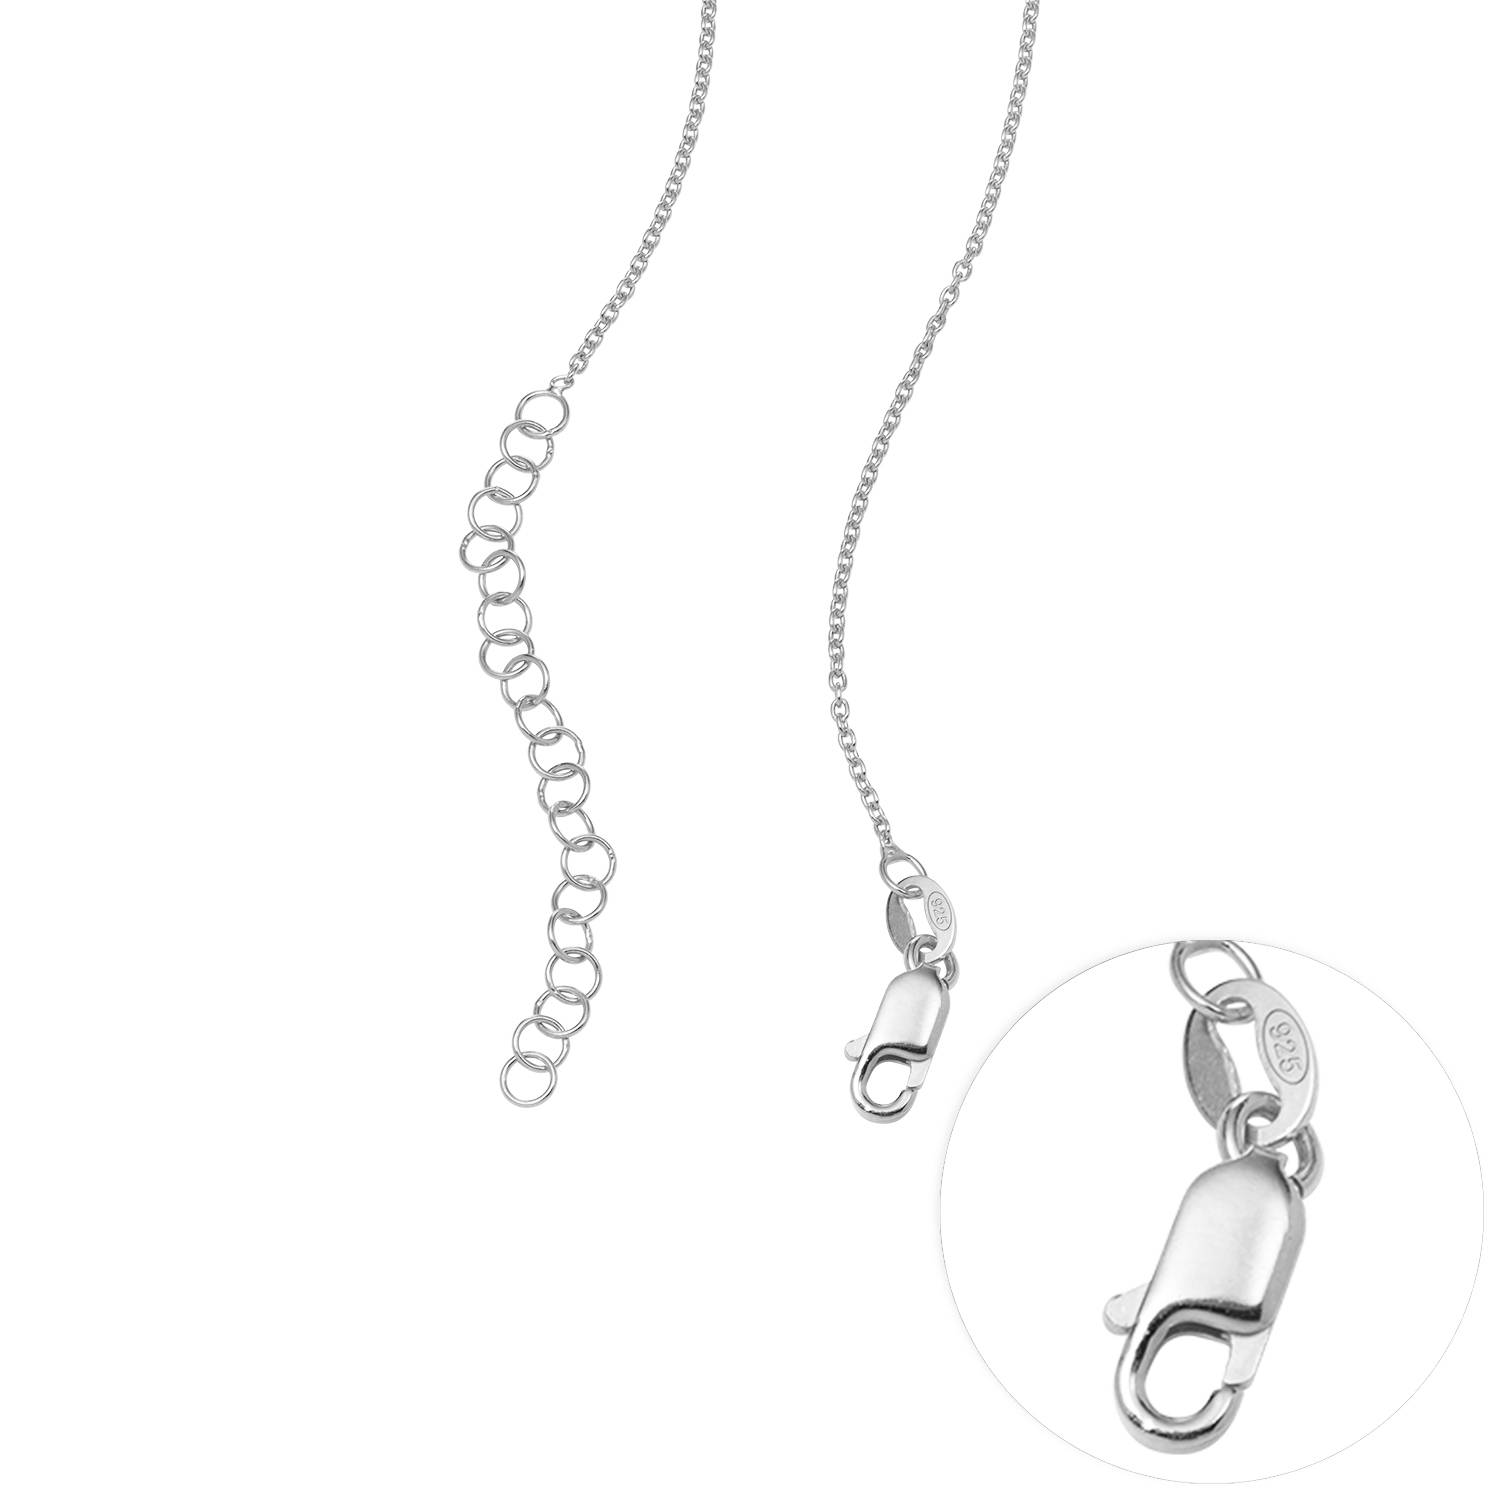 Ella diamant hart ketting met namen in sterling zilver-2 Productfoto